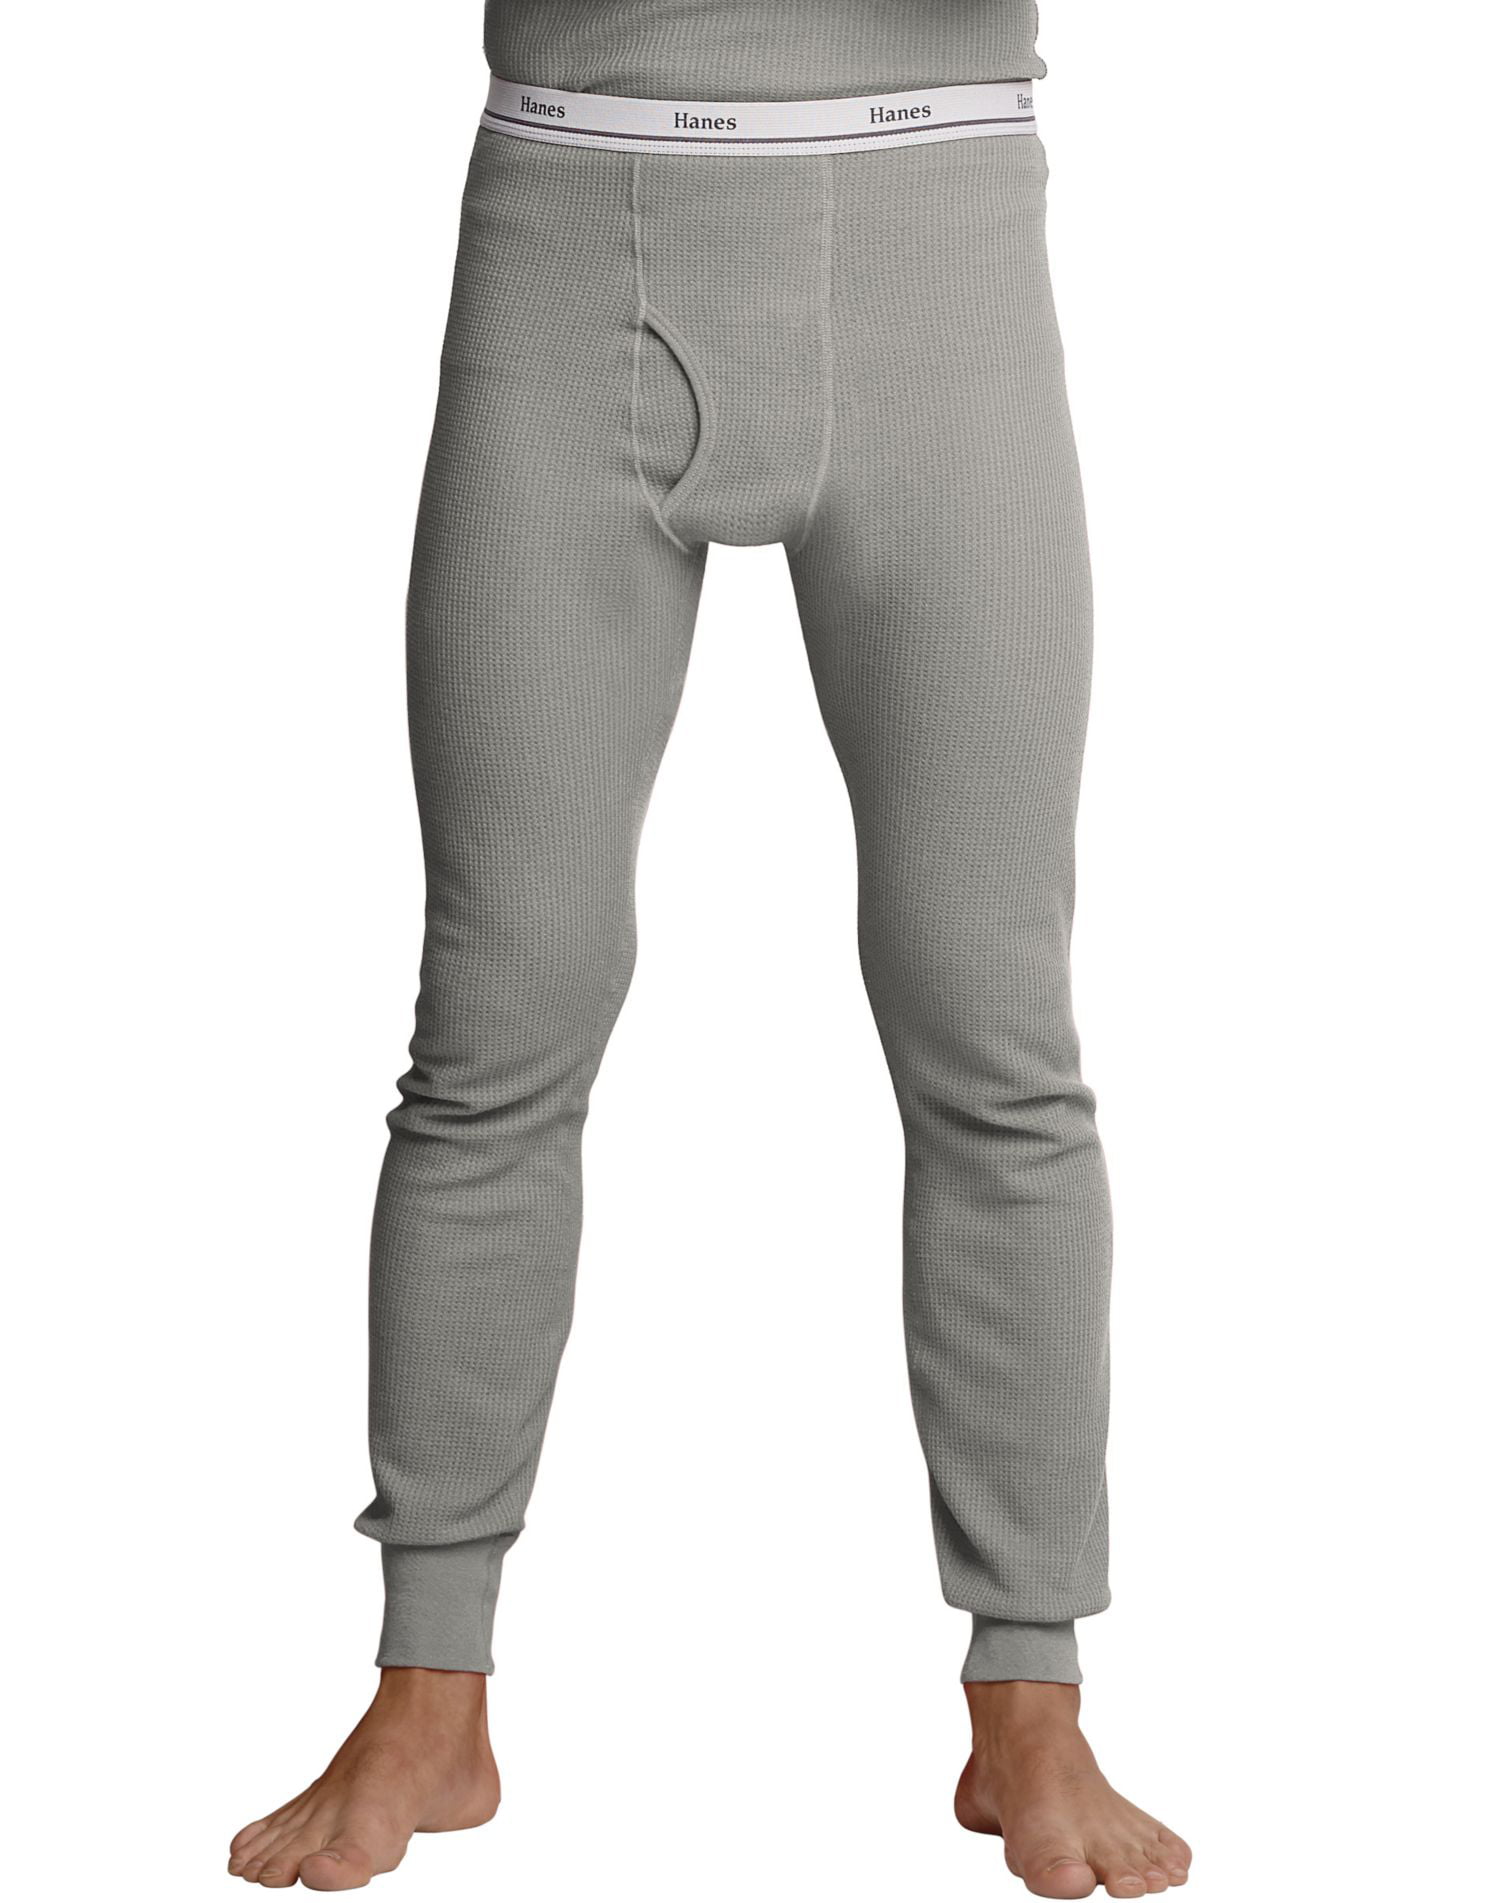 Hanes - Men's Thermal Pants - Walmart.com